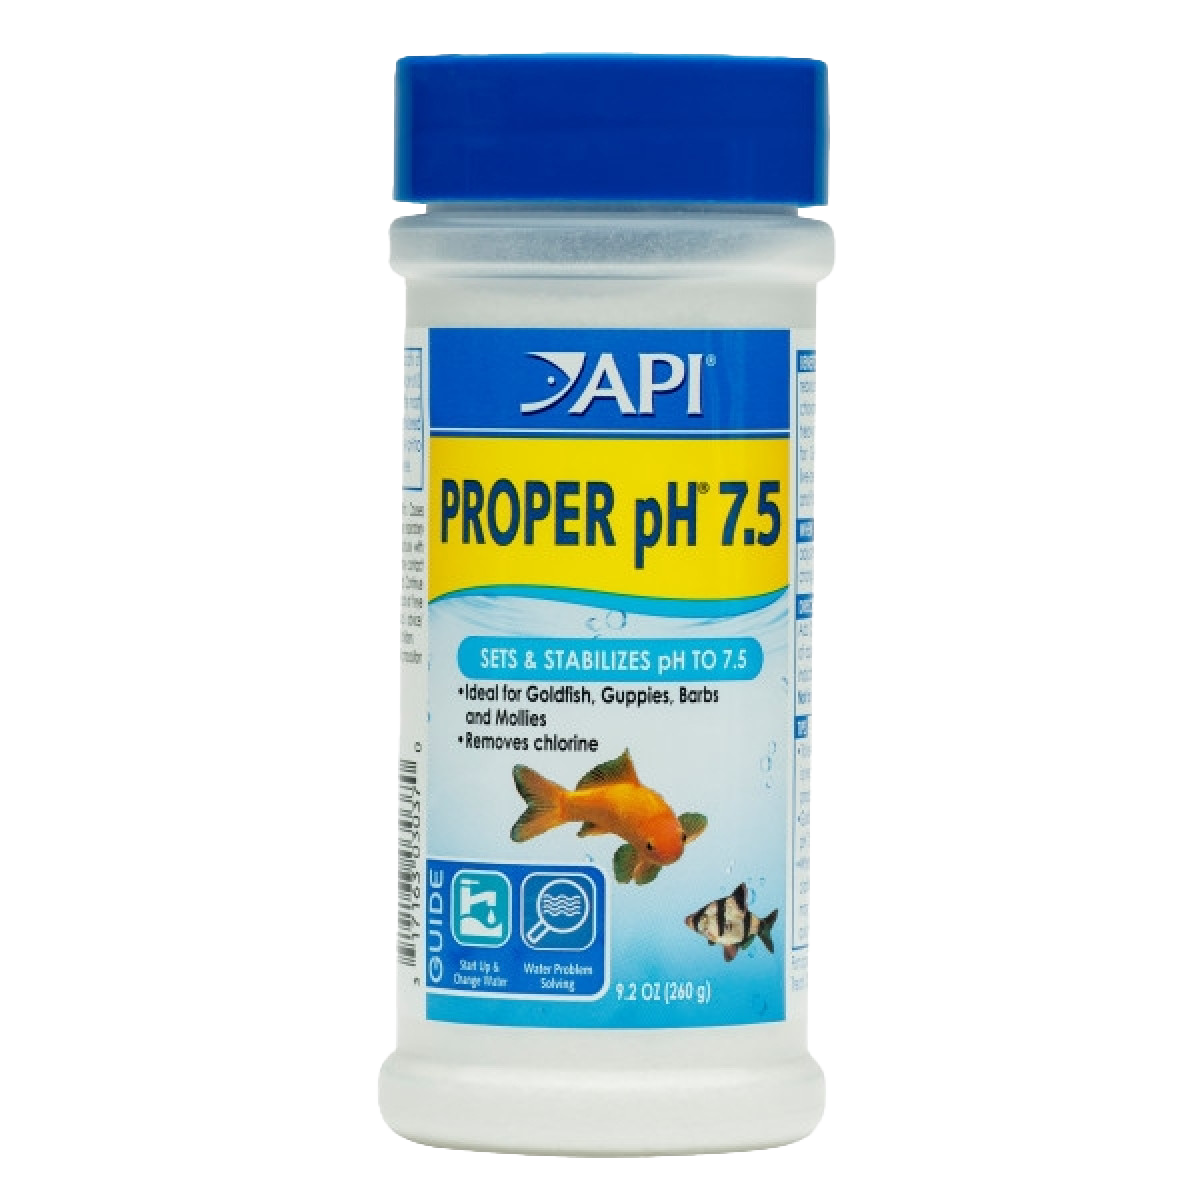 API Proper pH 7.5 Powder